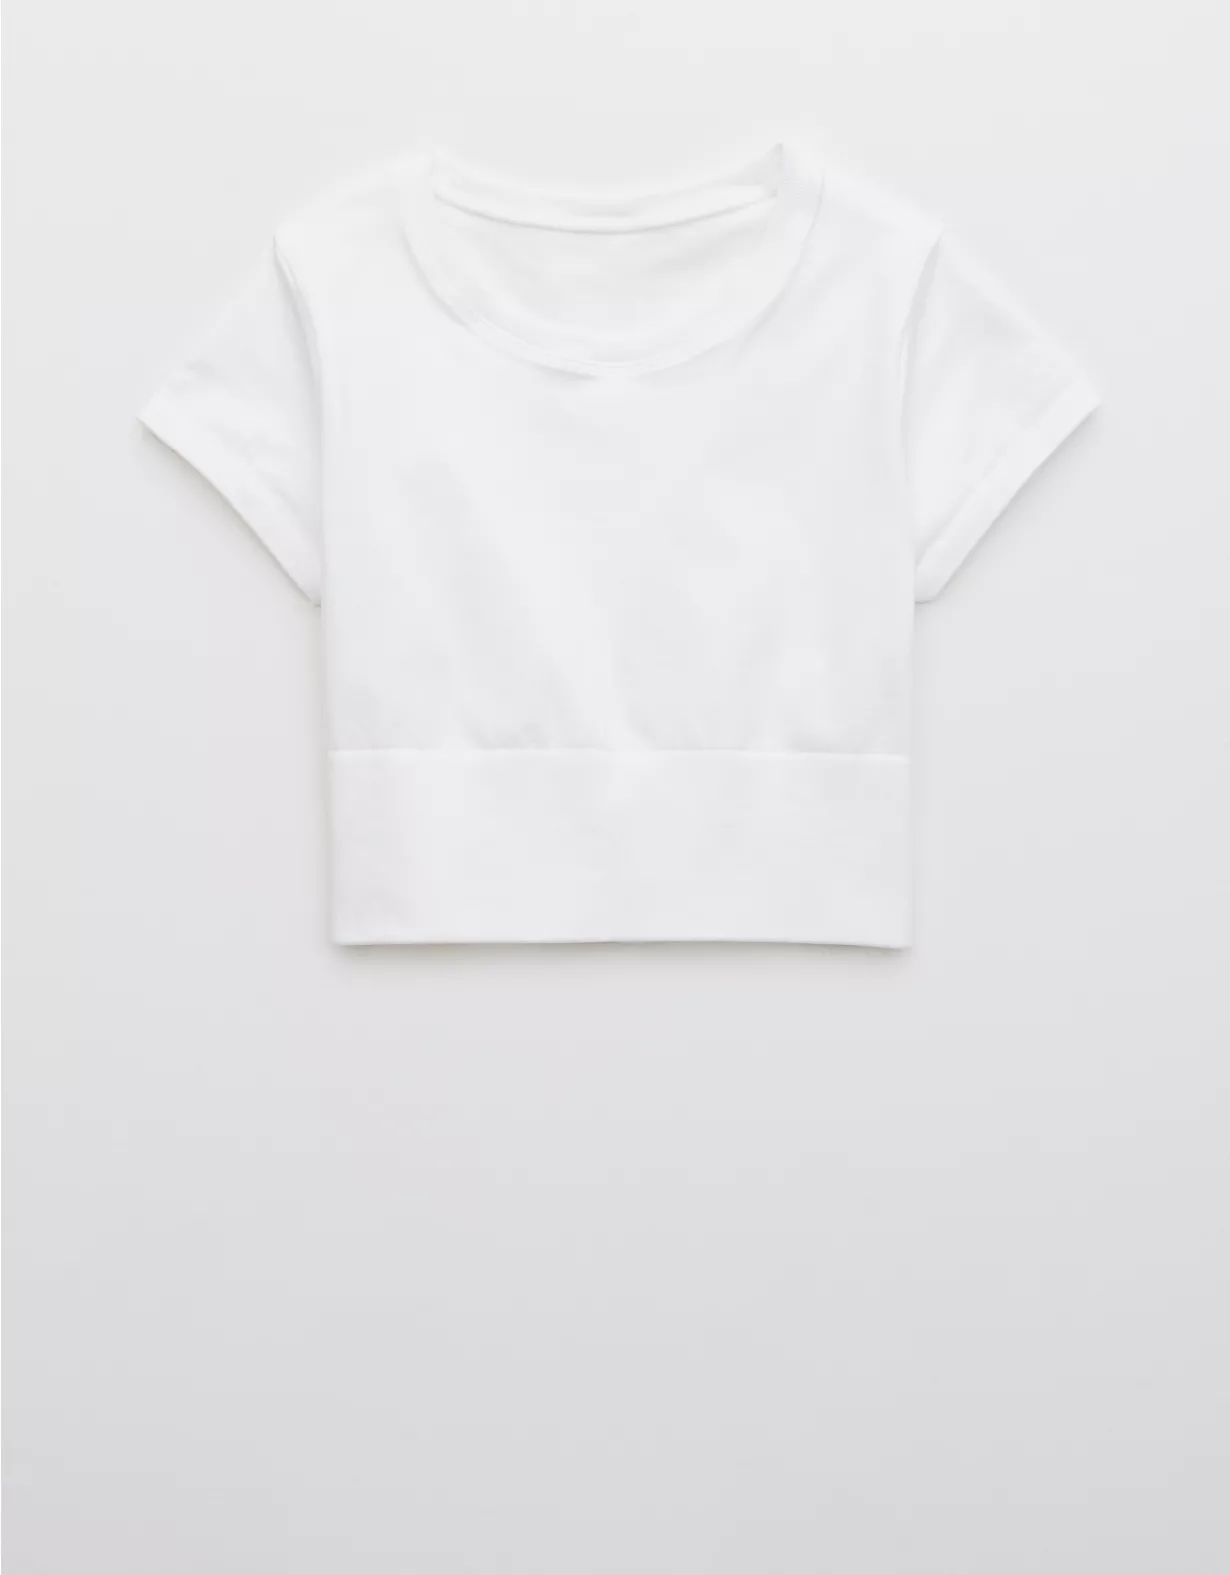 OFFLINE By Aerie Sidewalk Seamless Cropped T-Shirt | Aerie